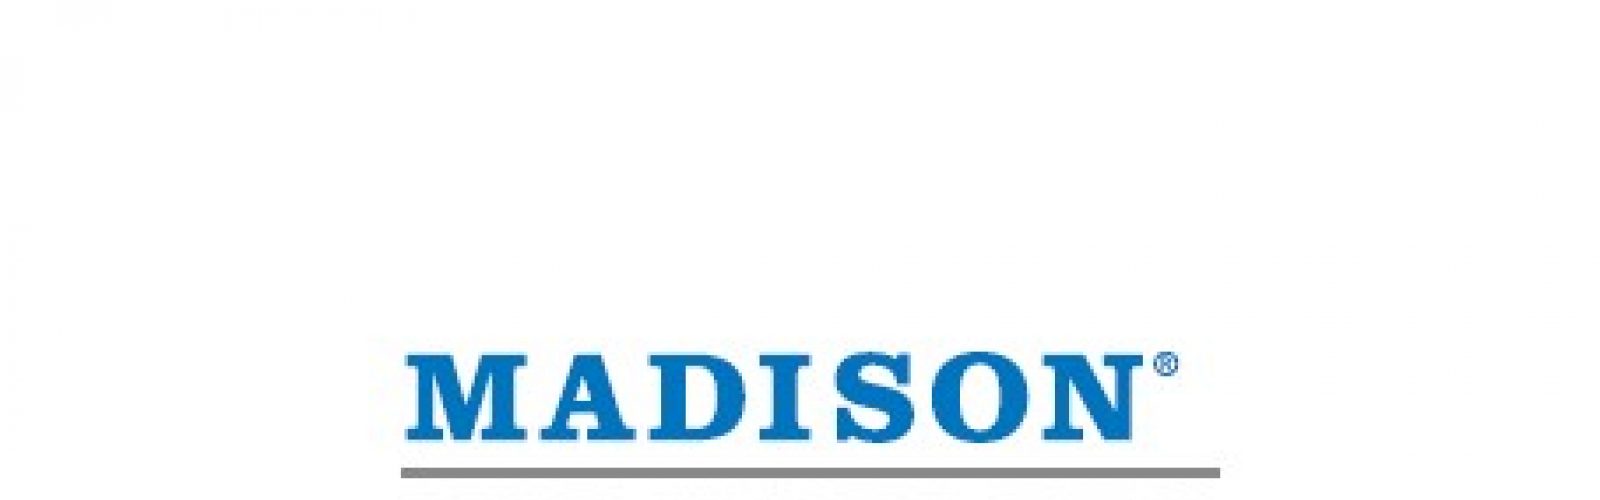 Madison Industries Logo Large Square